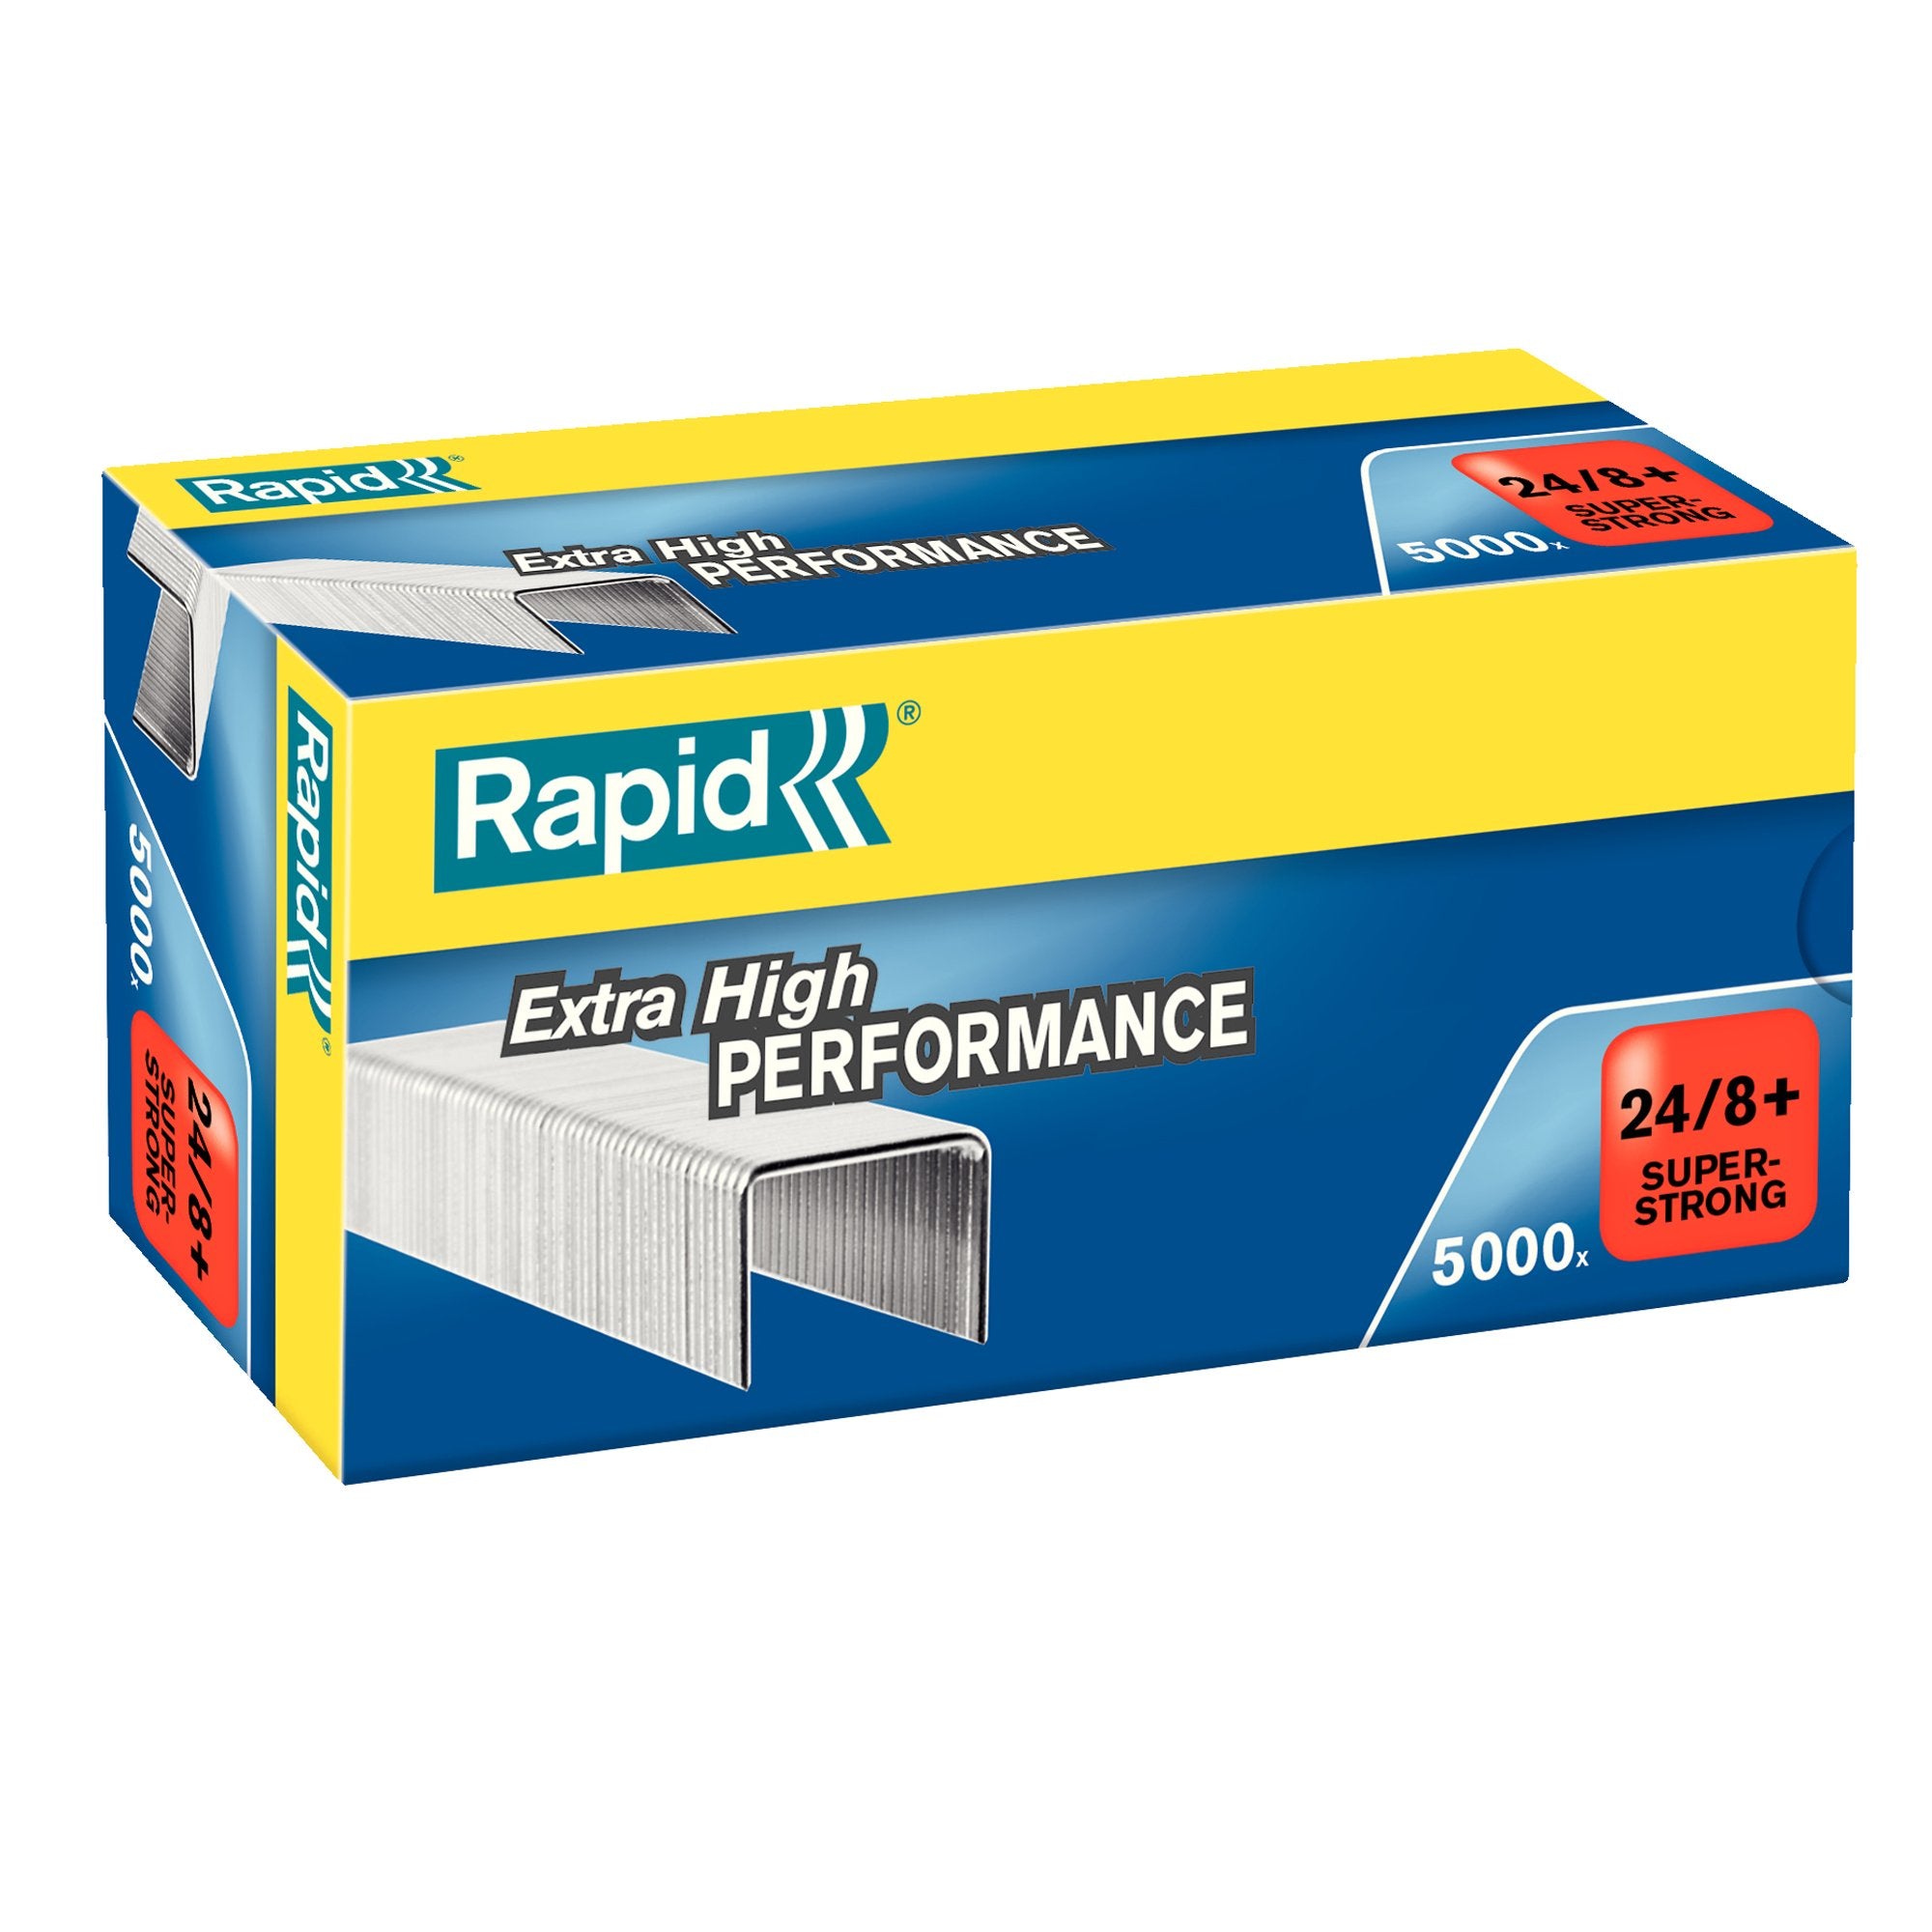 rapid-scatola-5000-punti-extra-high-performance-24-8